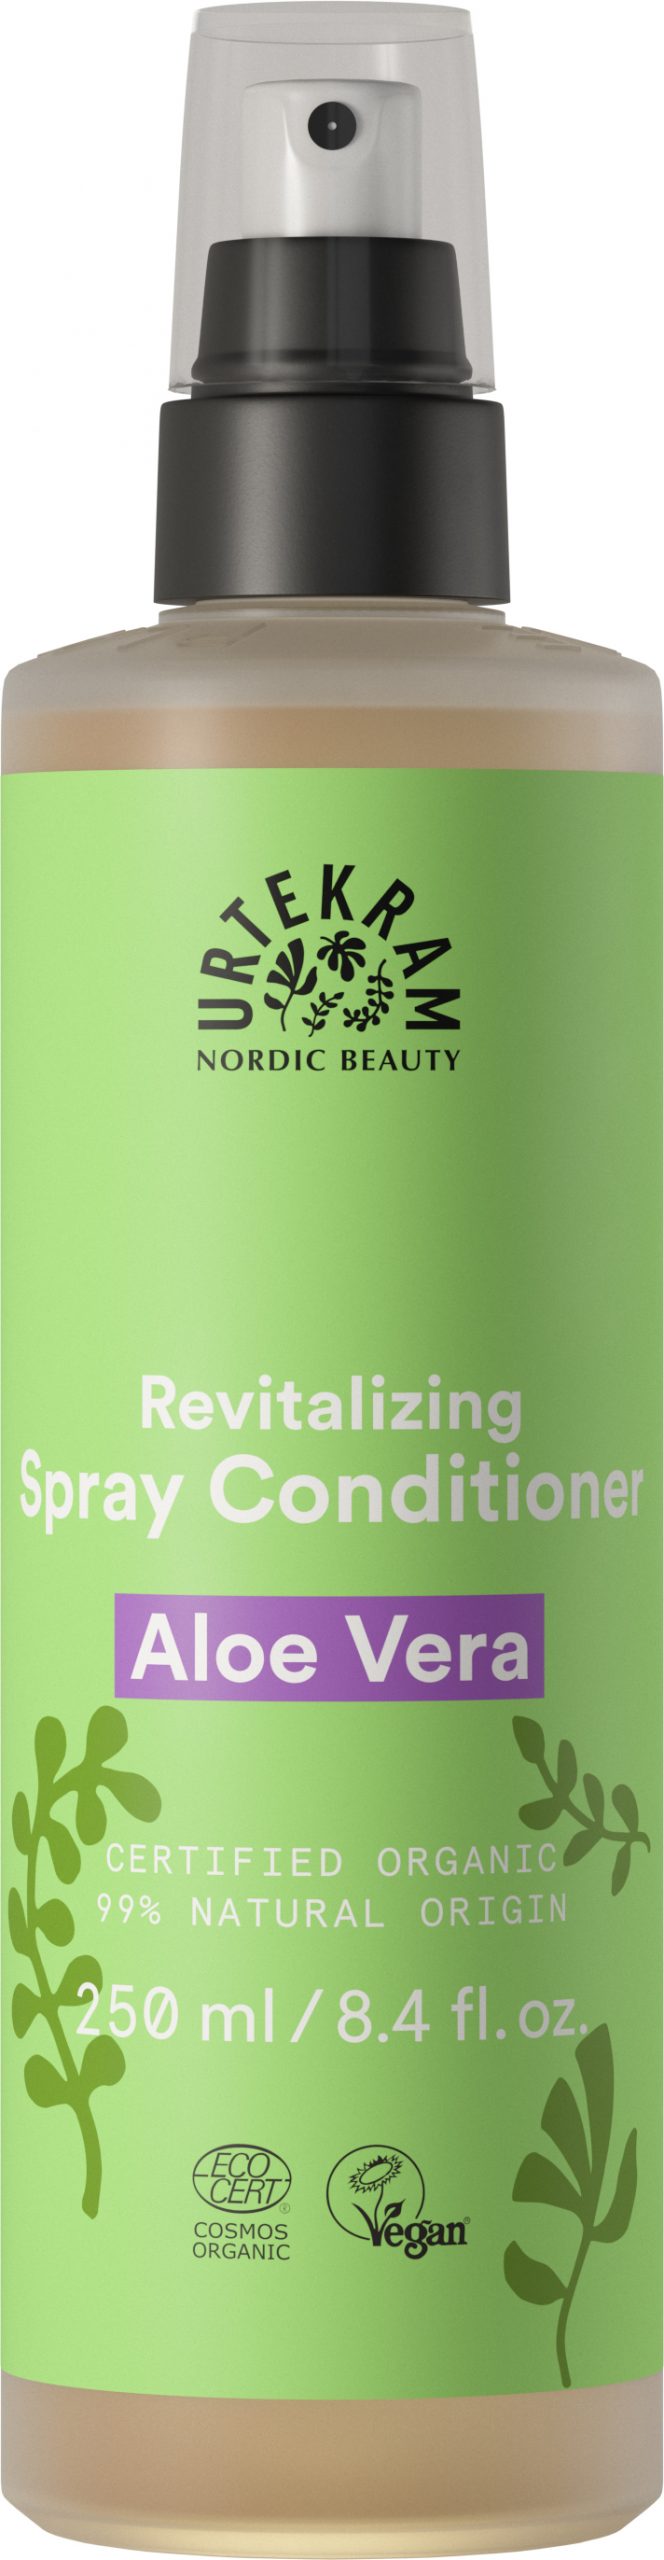 Urtekram Aloe Vera Spray Conditioner kopen